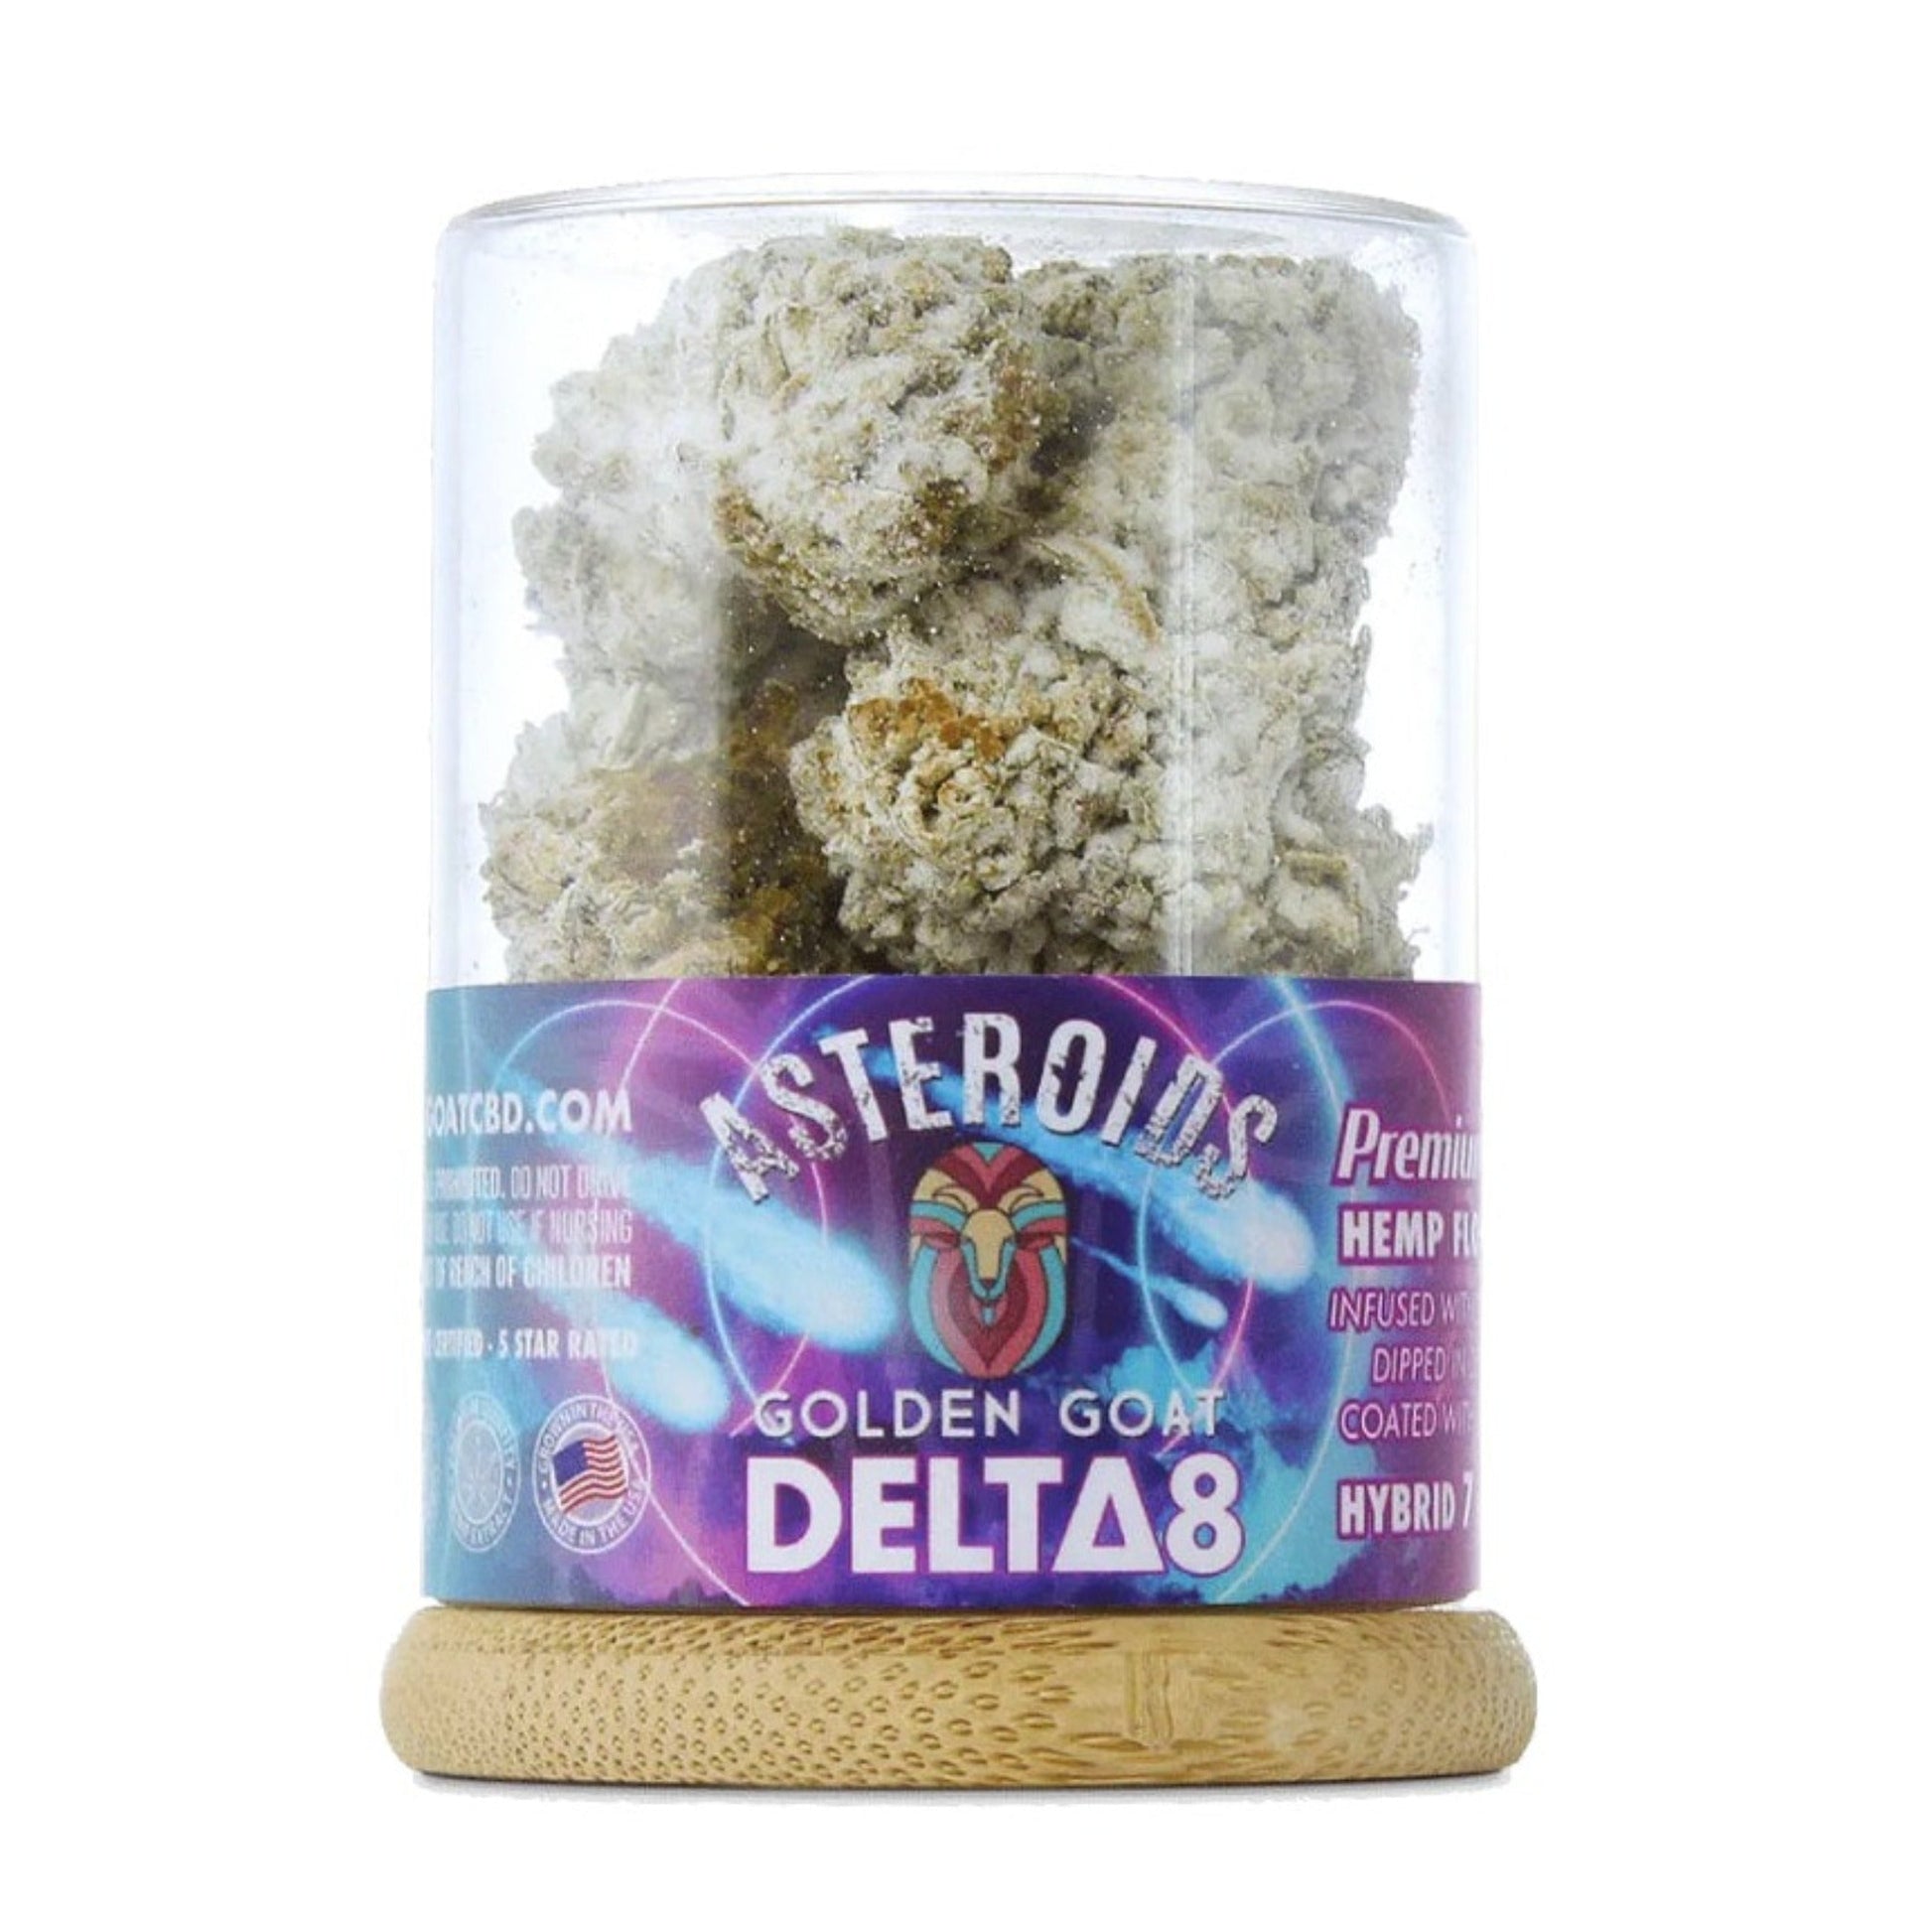 Golden Goat Delta 8 Asteroids - 3.5g